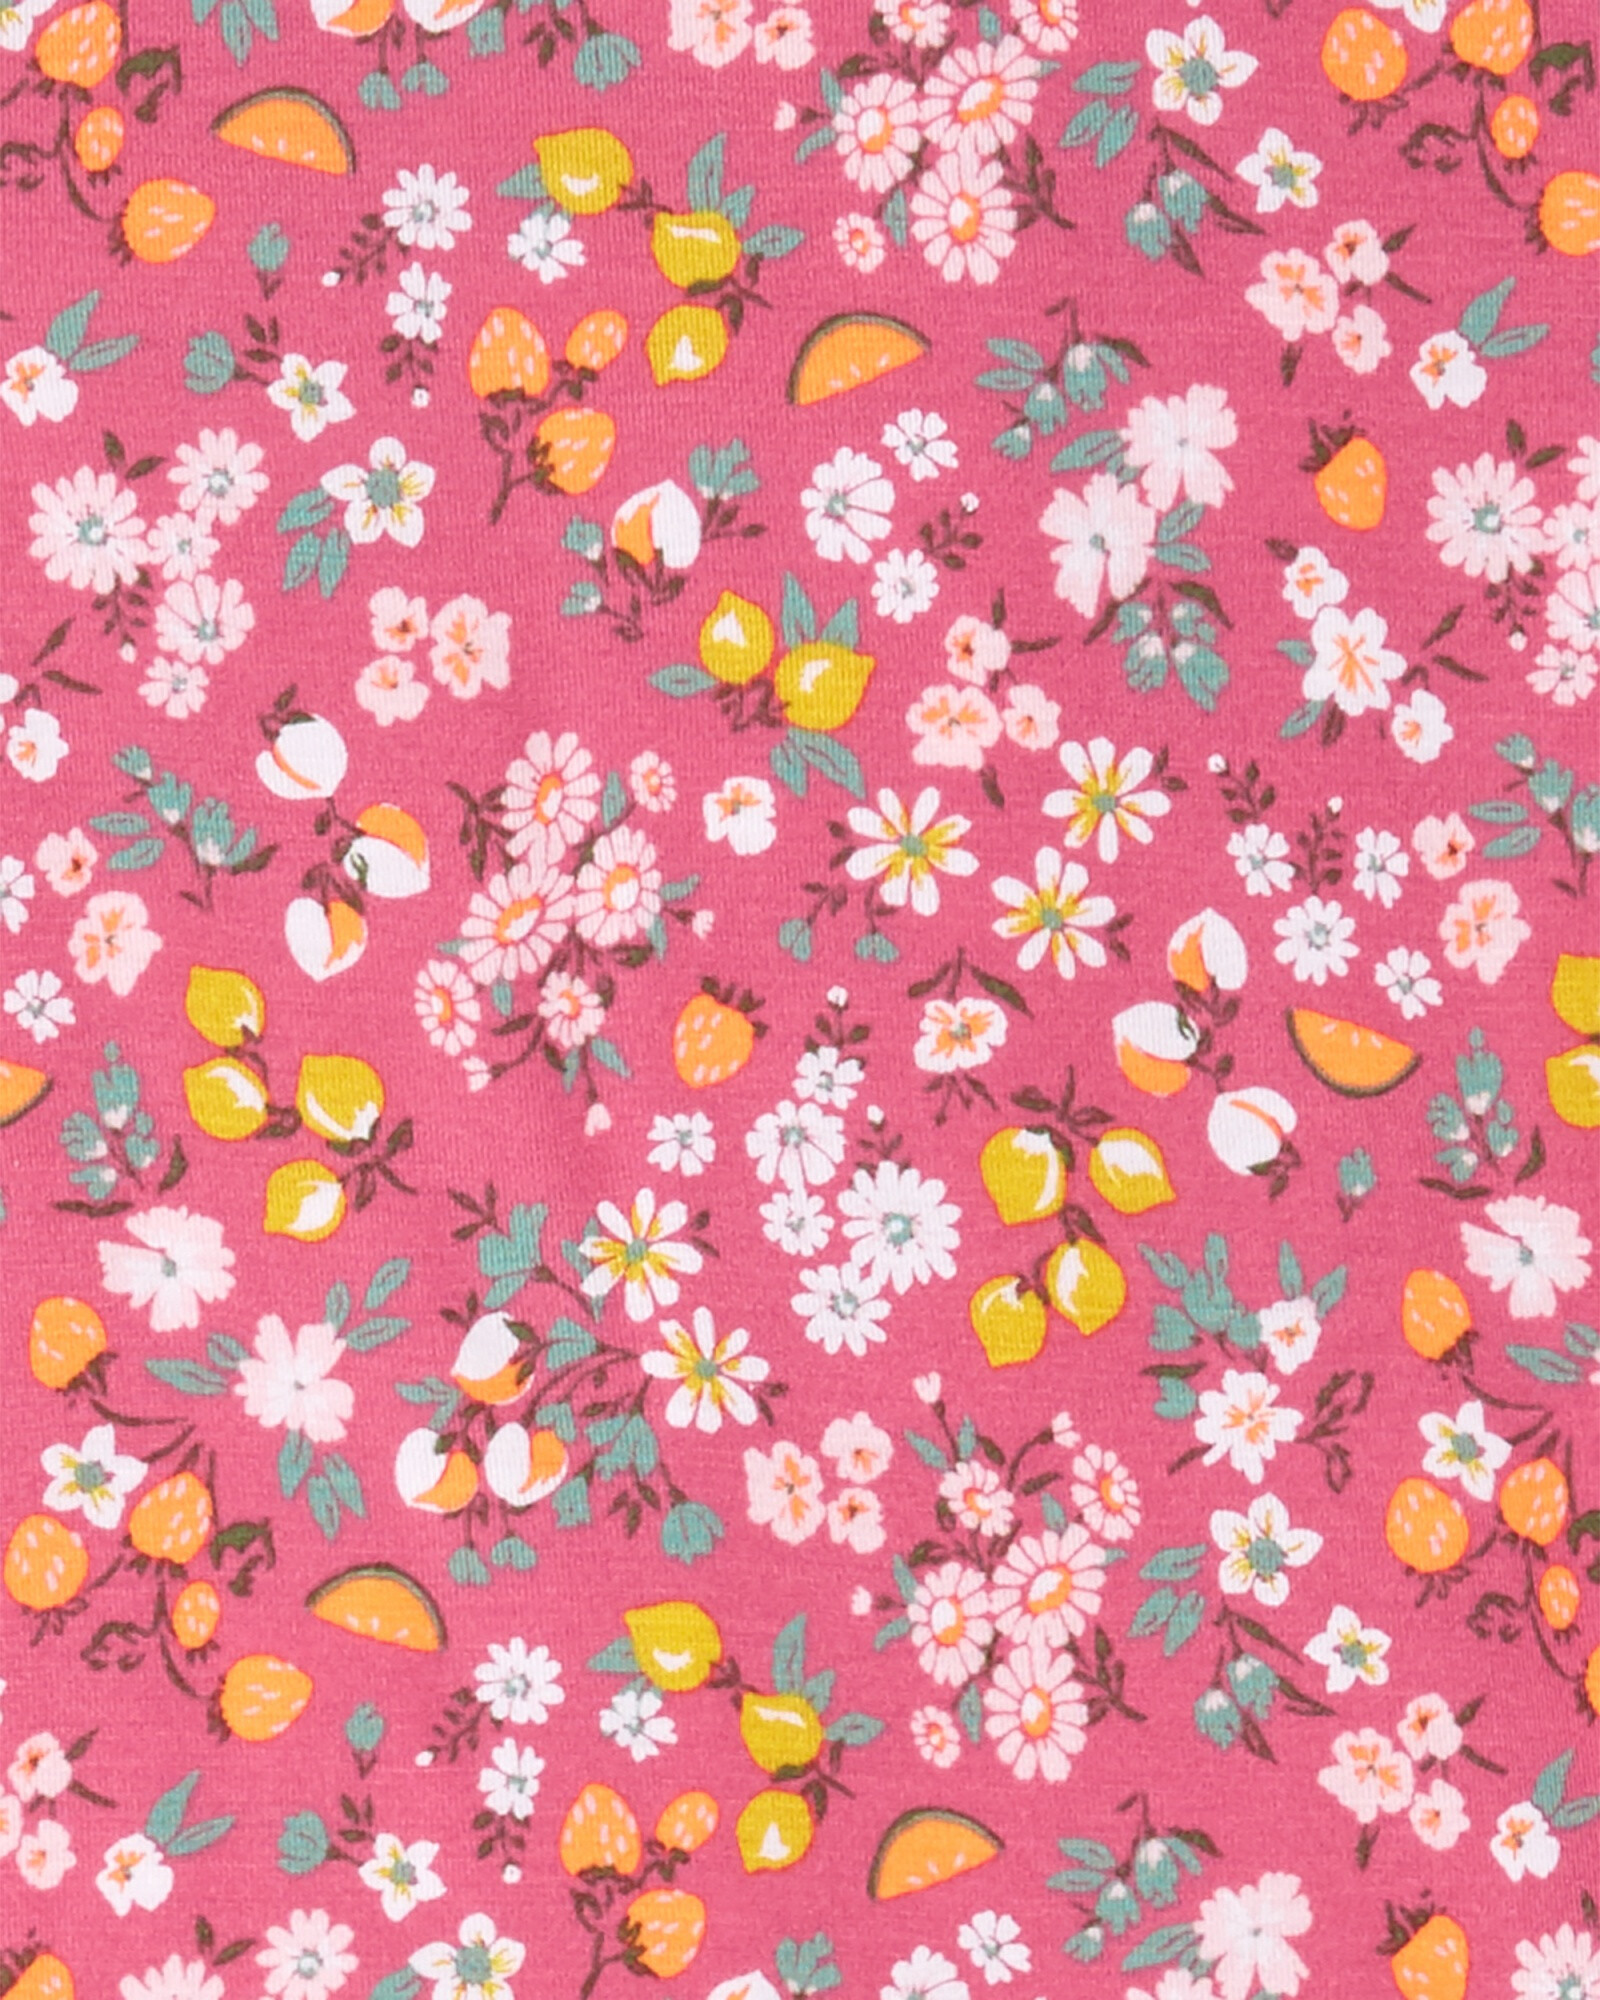 Pijama dos piezas diseño floral línea purelysoft 0